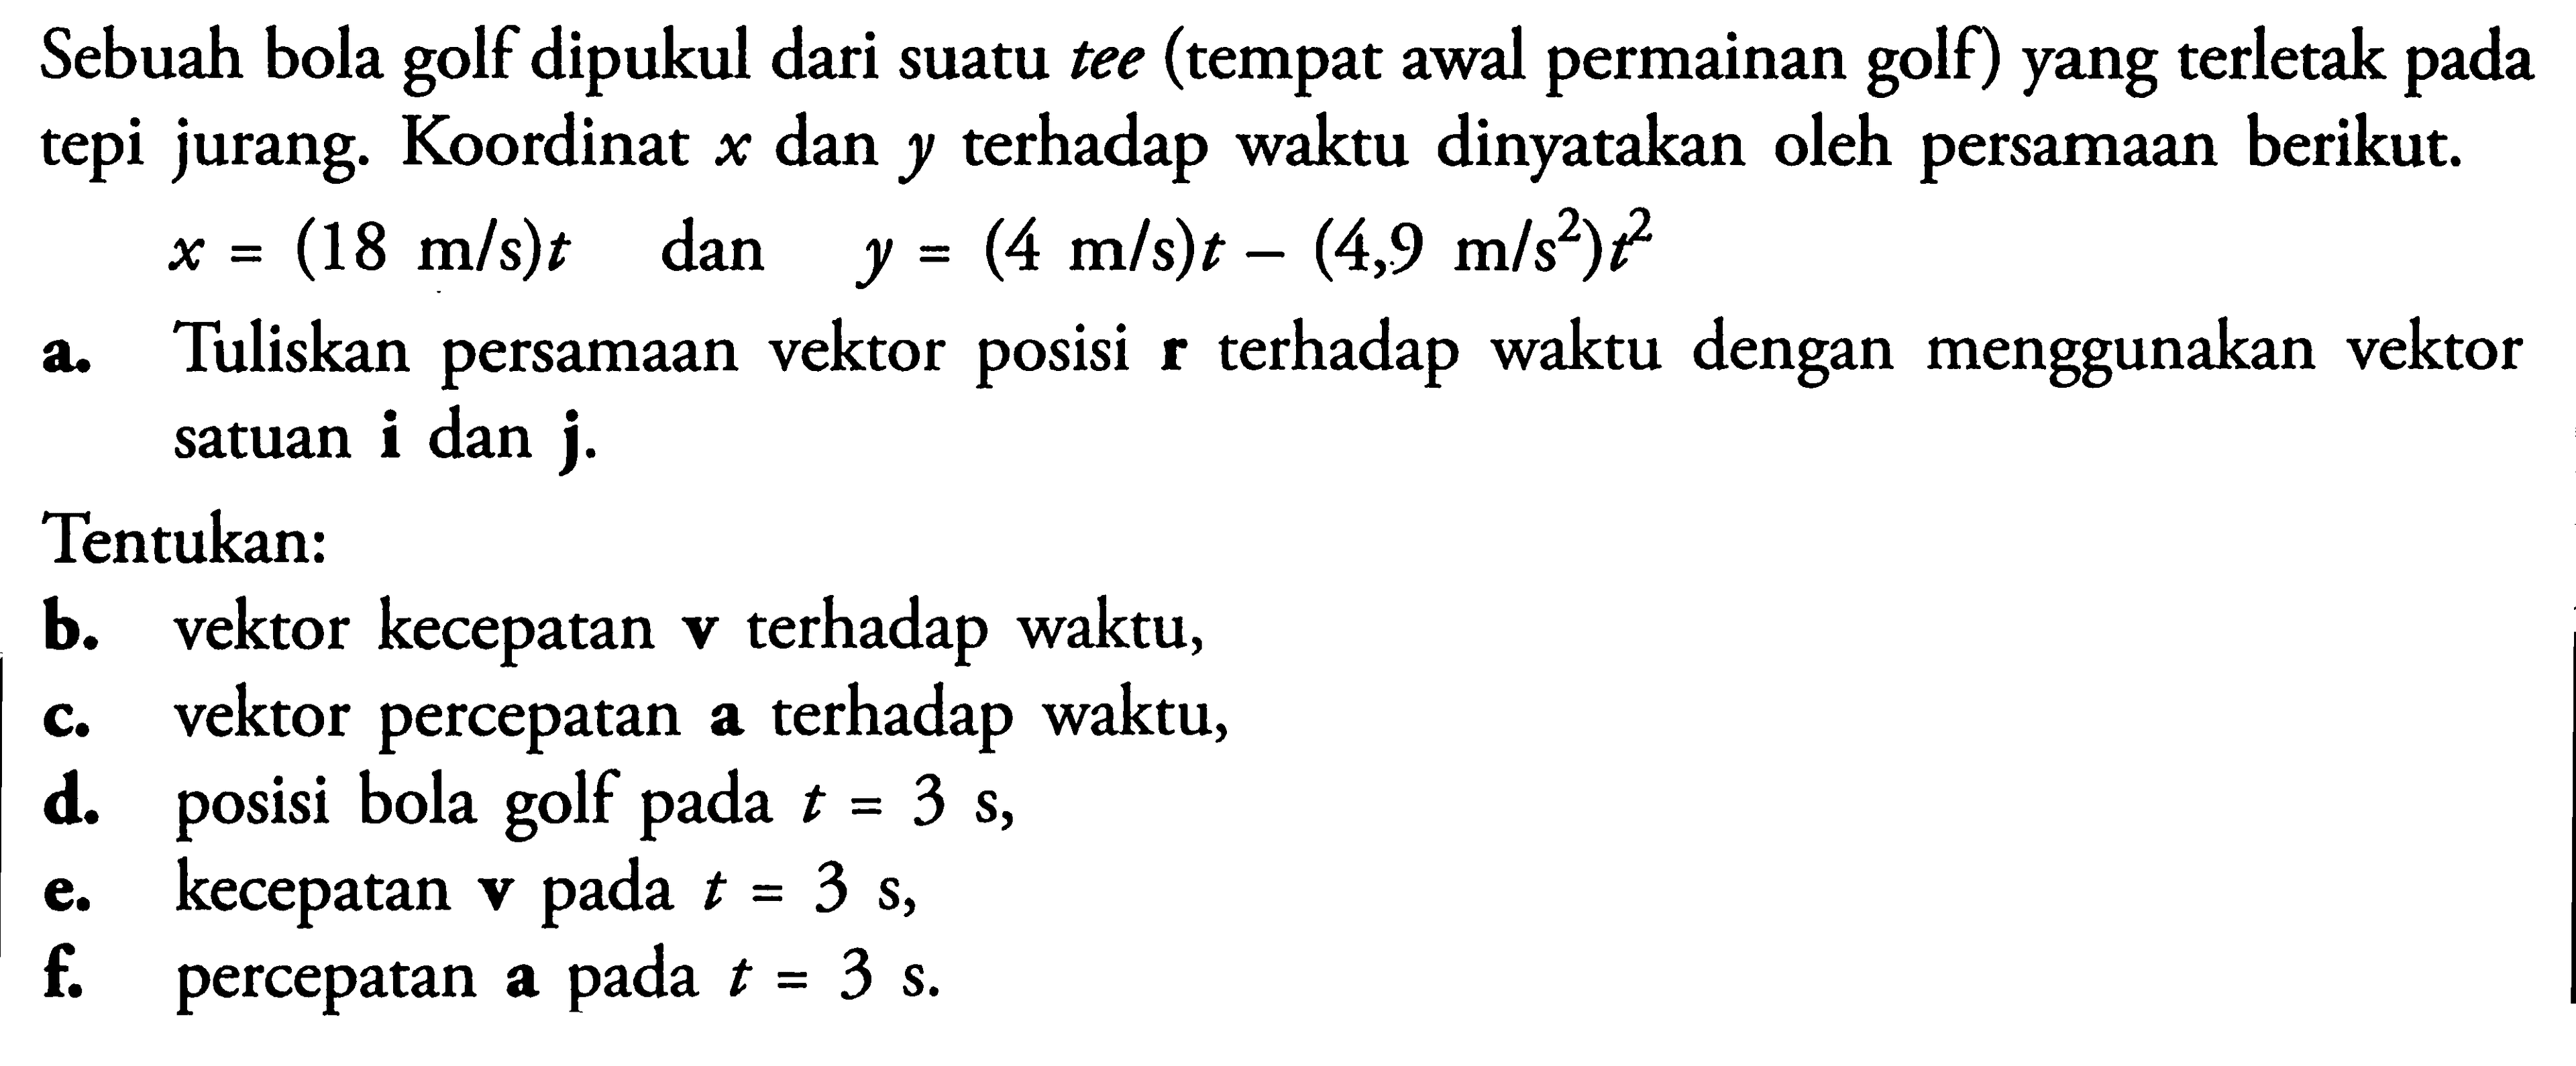 Sebuah bola golf dipukul dari suatu tee (tempat awal permainan golf) yang terletak pada tepi jurang. Koordinat x dan y terhadap waktu dinyatakan oleh persamaan berikut. x=(18 m/s)t  dan y=(4 m/s)t-(4,9 m/s^2)t^2 a. Tuliskan persamaan vektor posisi r terhadap waktu dengan menggunakan vektor satuan i dan j. Tentukan: b. vektor kecepatan v terhadap waktu, c. vektor percepatan a terhadap waktu, d. posisi bola golf pada t=3 s, e. kecepatan v pada  t=3 s , f. percepatan a pada t=3 s.